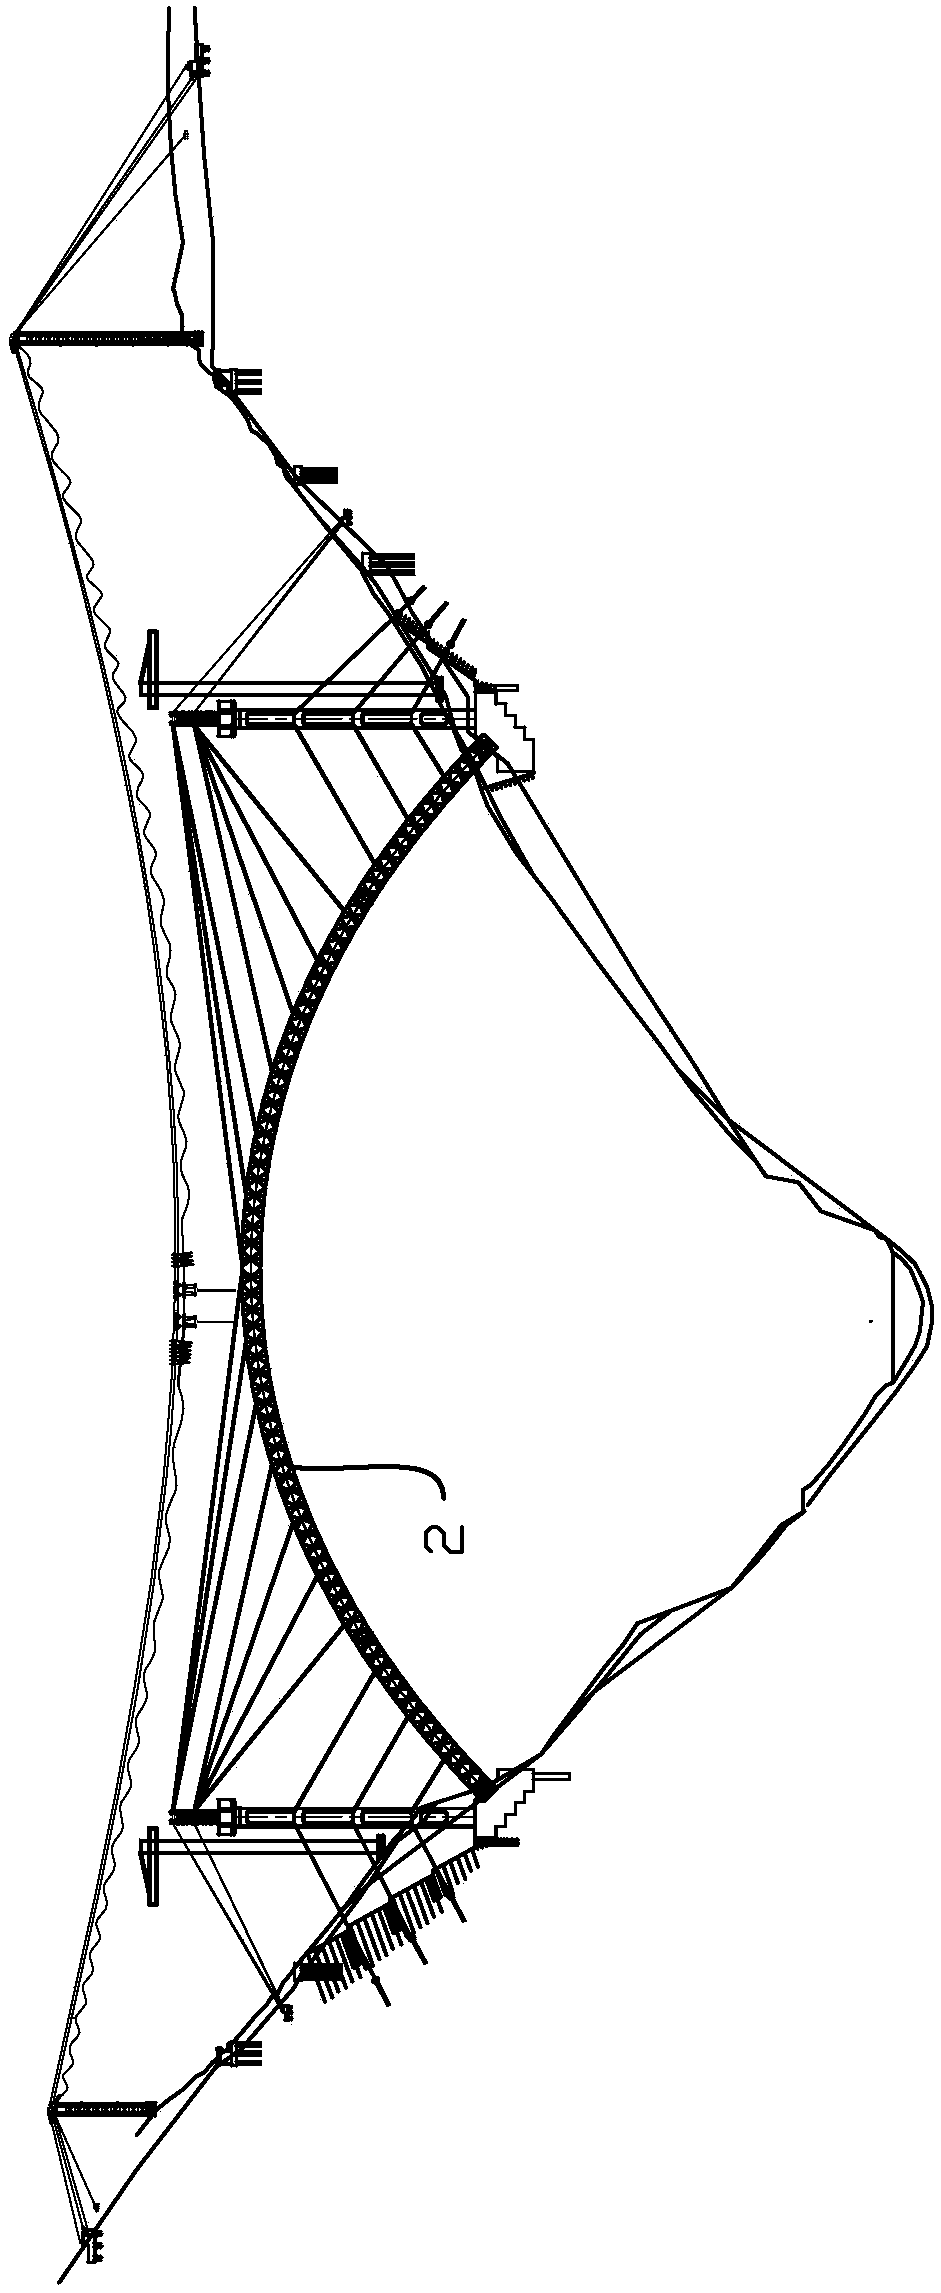 Construction method of extra-long-span stiff skeleton